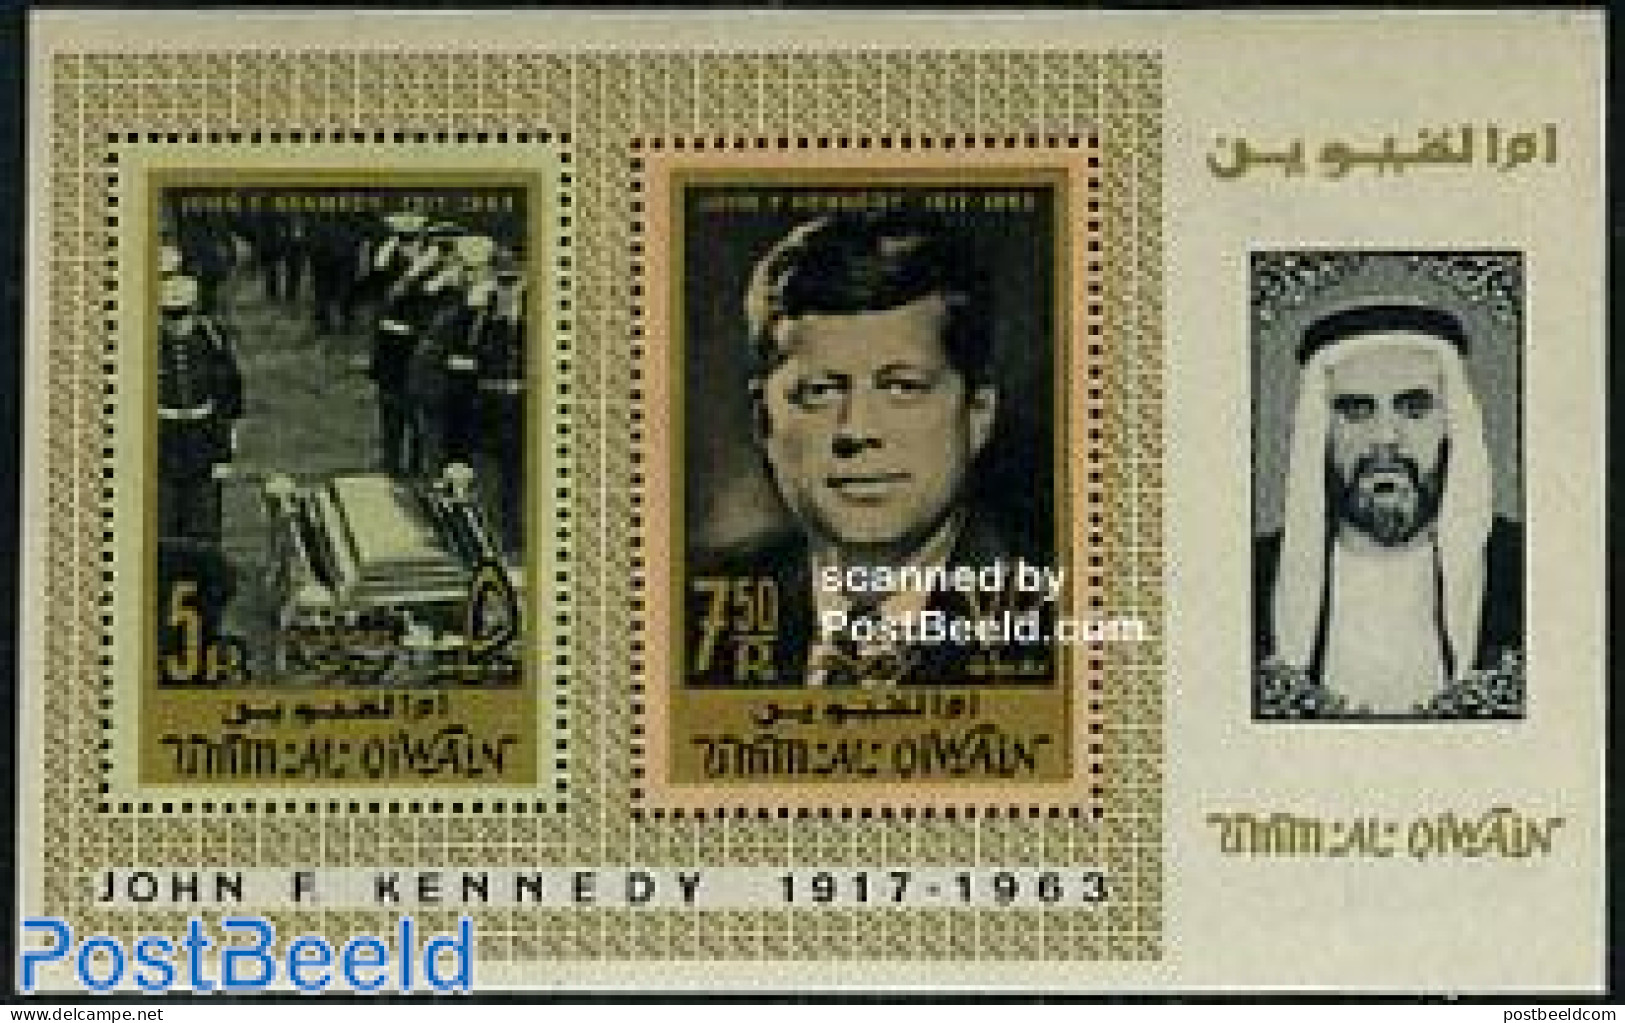 Umm Al-Quwain 1965 J.F. Kennedy S/s, Mint NH, History - American Presidents - Umm Al-Qiwain